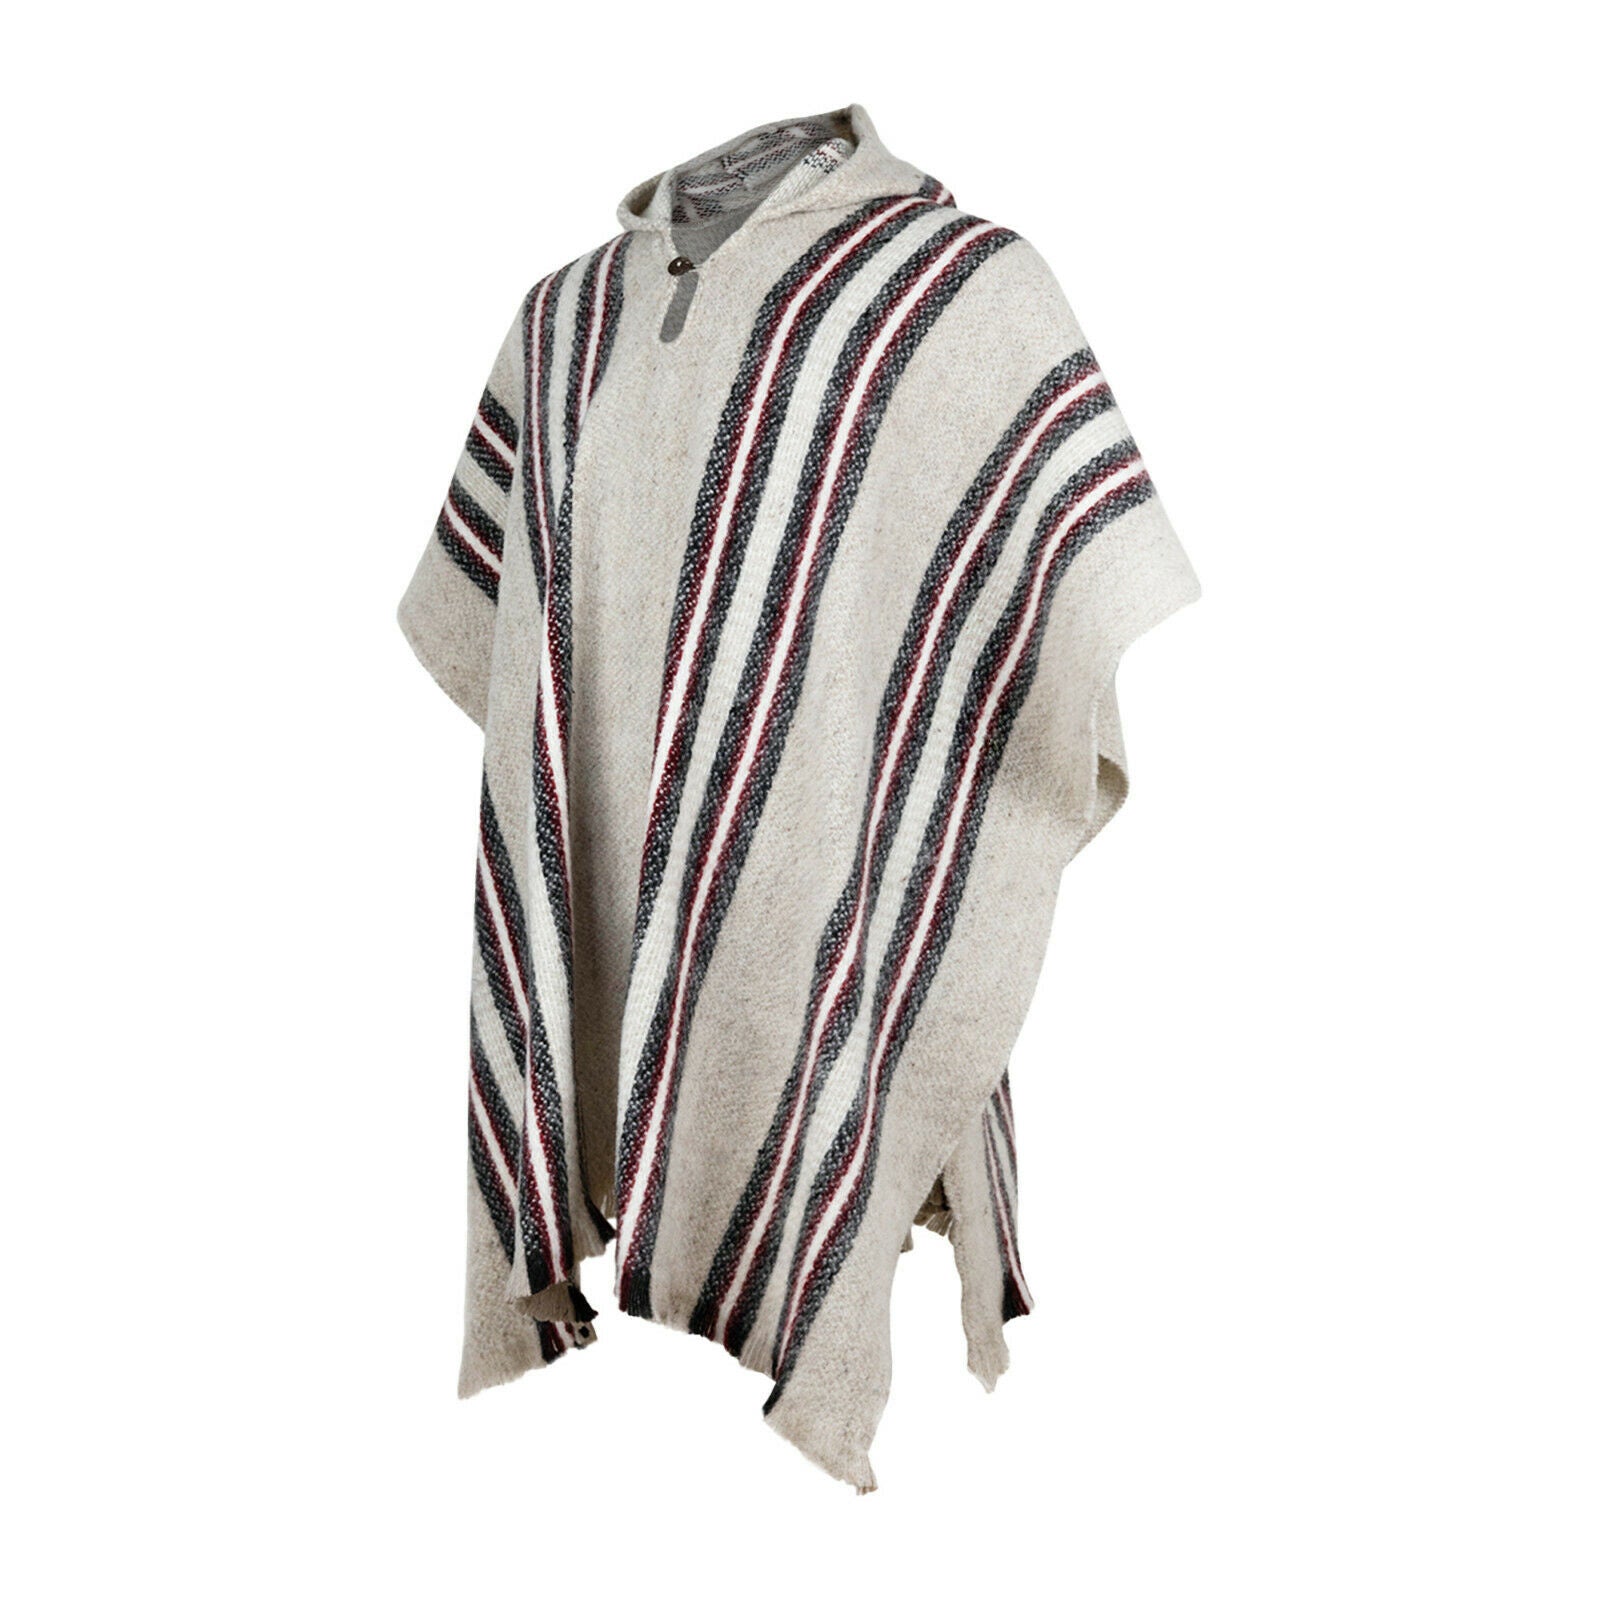 Zamora - Llama Wool Unisex South American Handwoven Poncho - beige striped pattern